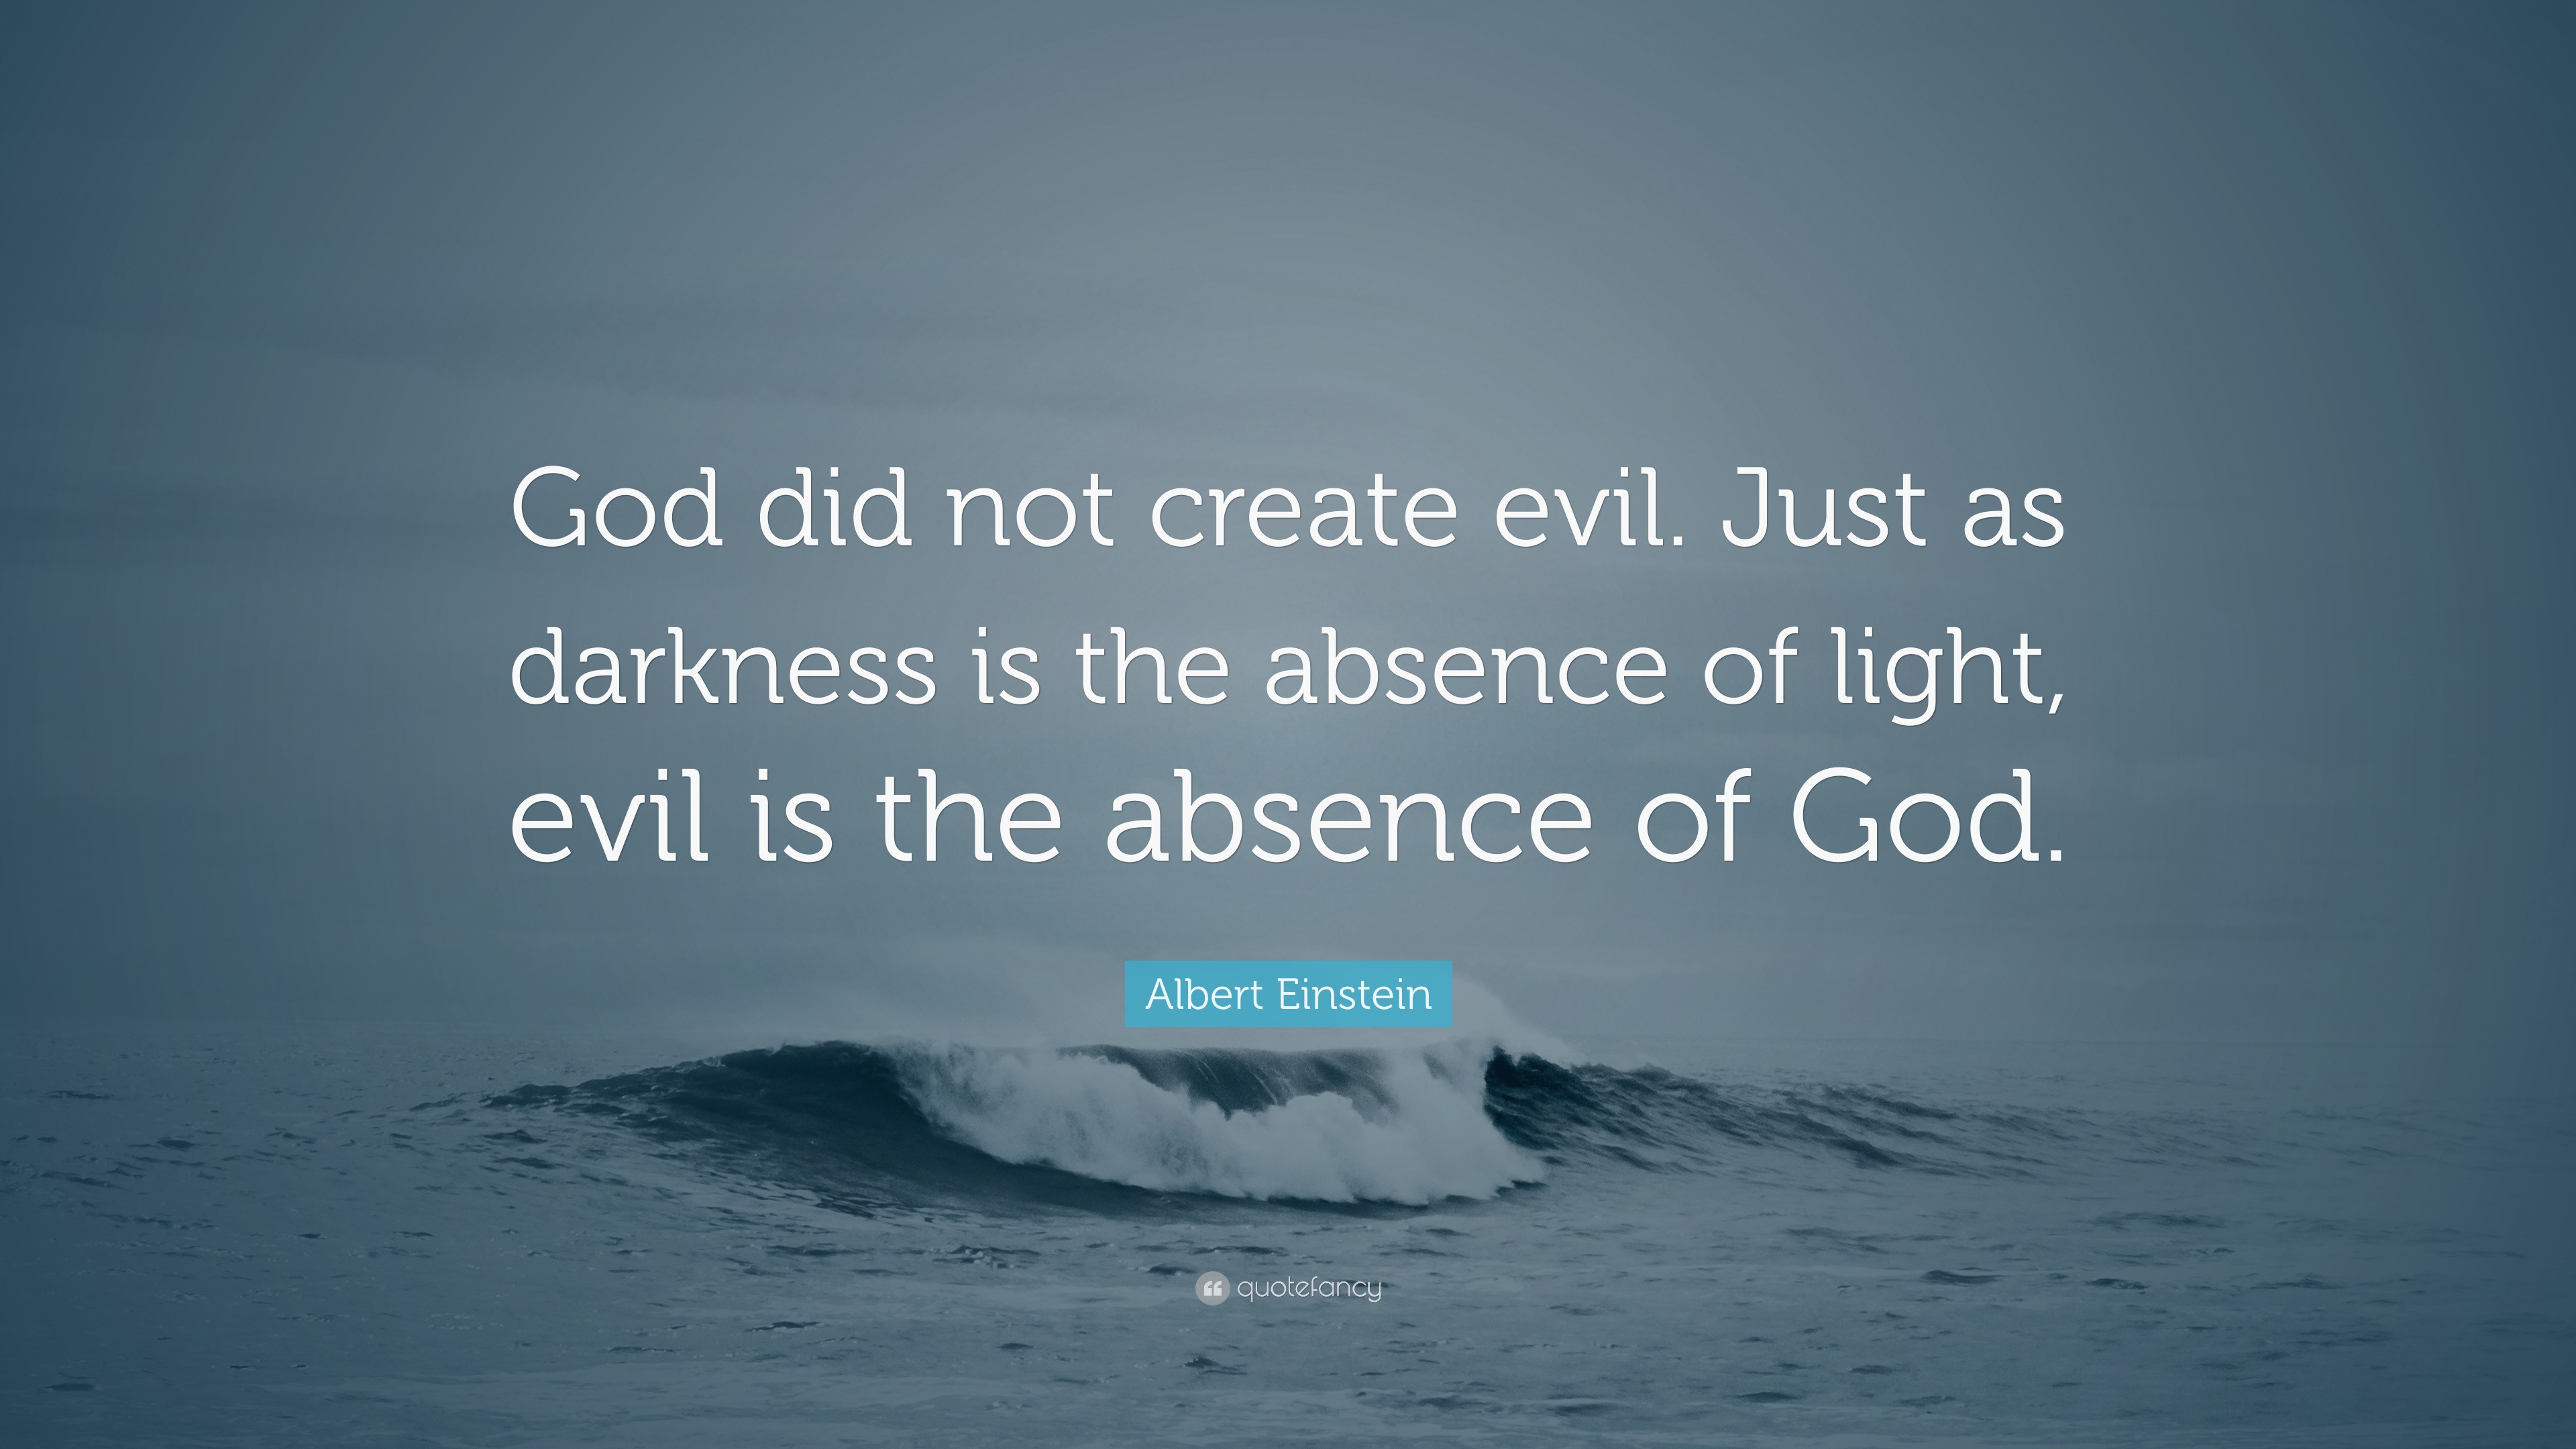 Albert Einstein Quote: “God did not create evil. Just as darkness is